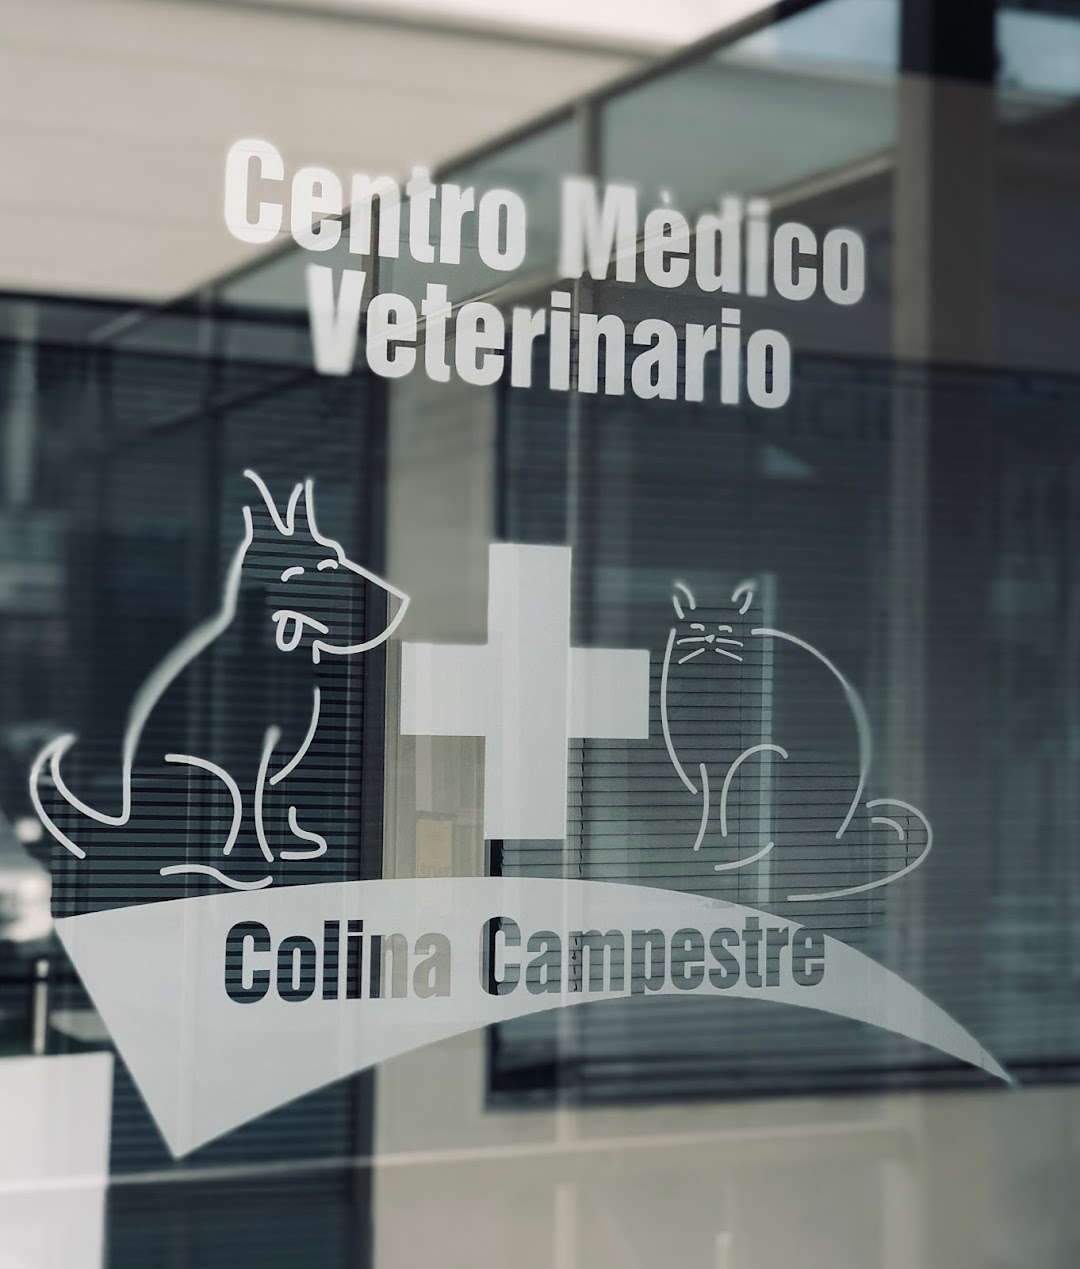 Veterinaria, Centro Médico Veterinario Colina Campestre